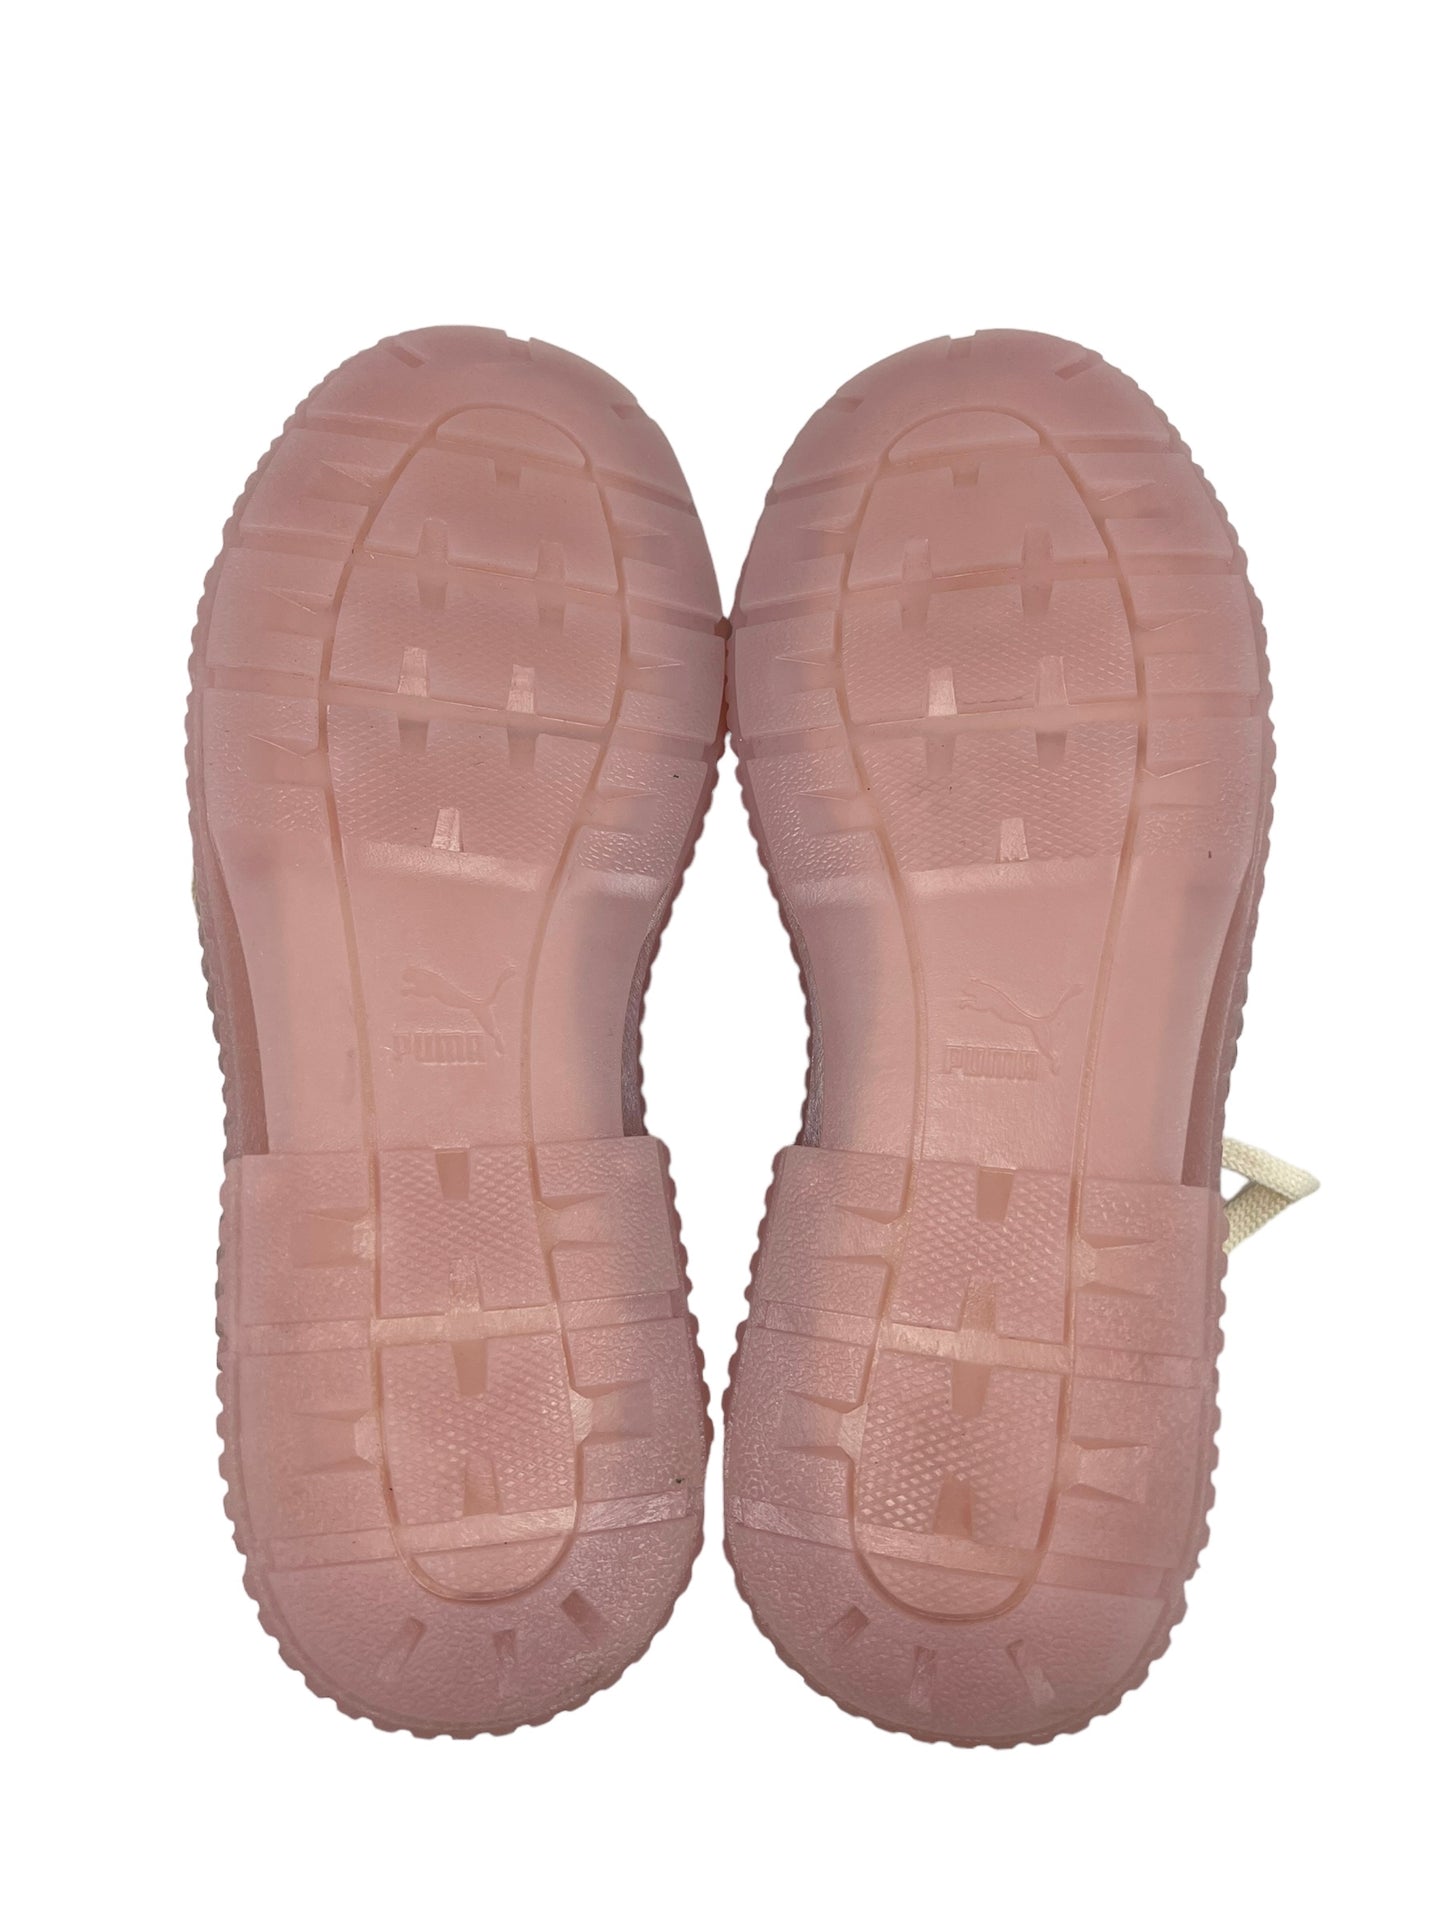 Puma Size 7.5 Pink Dinara Shine Sneakers